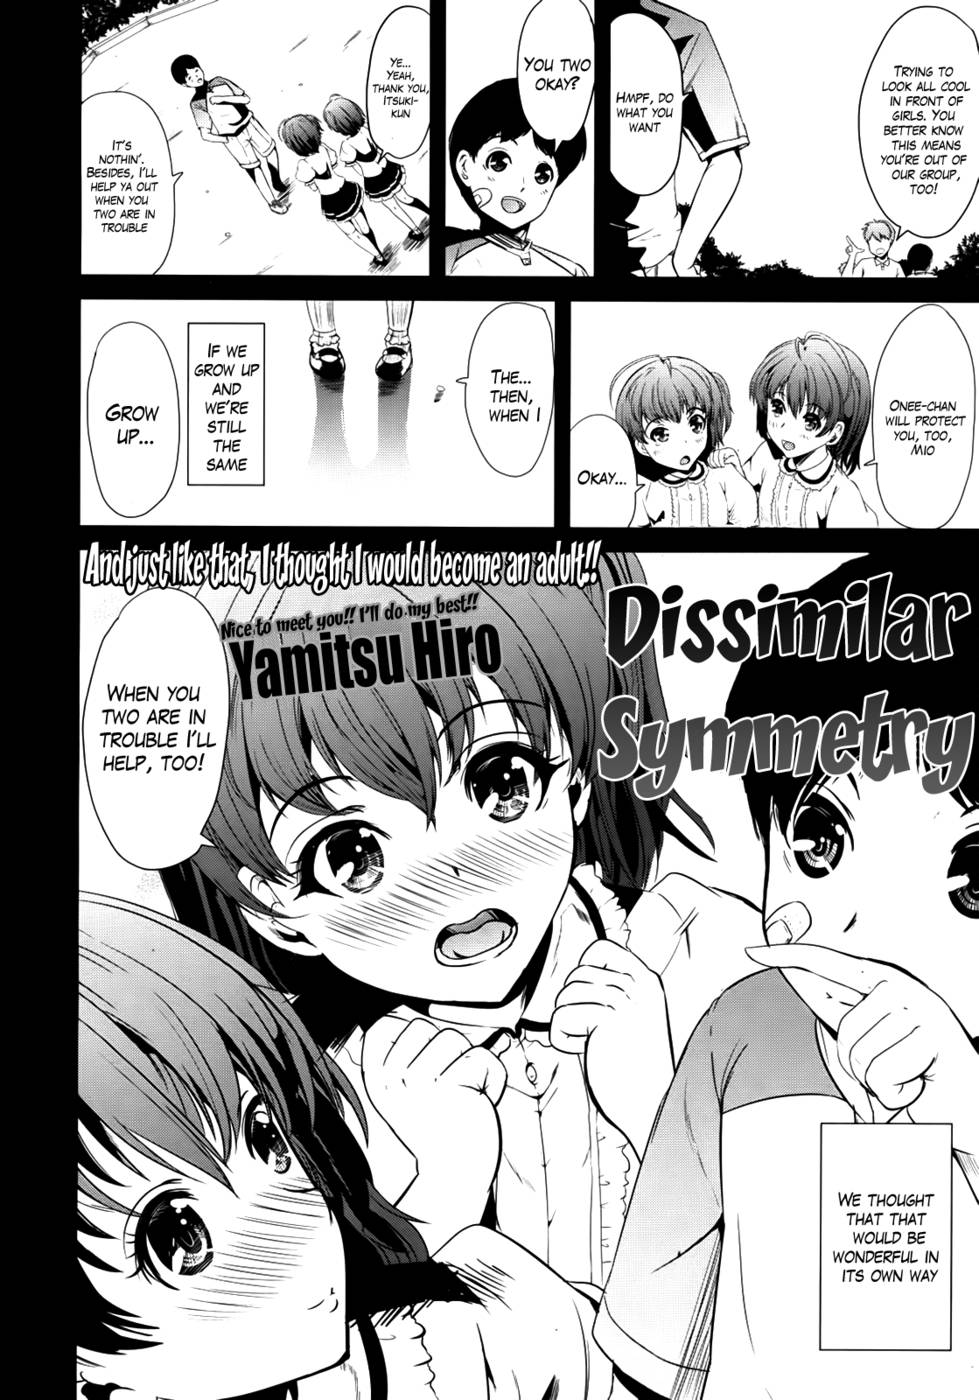 Hentai Manga Comic-Dissimilar Symmetry-Read-2